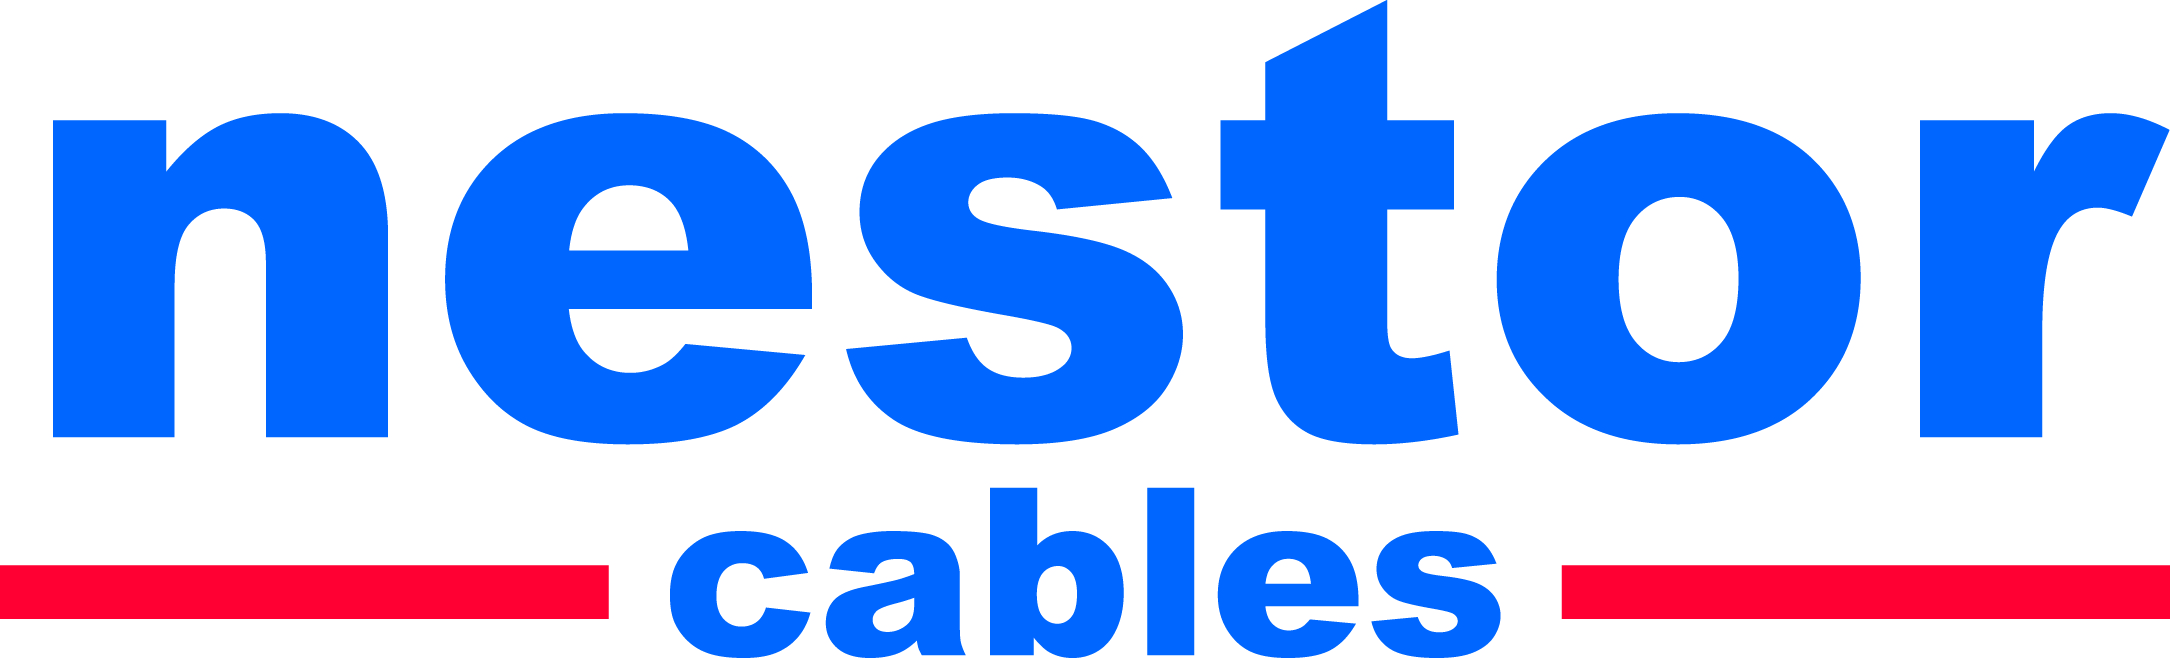 Nestor Cables Ltd.